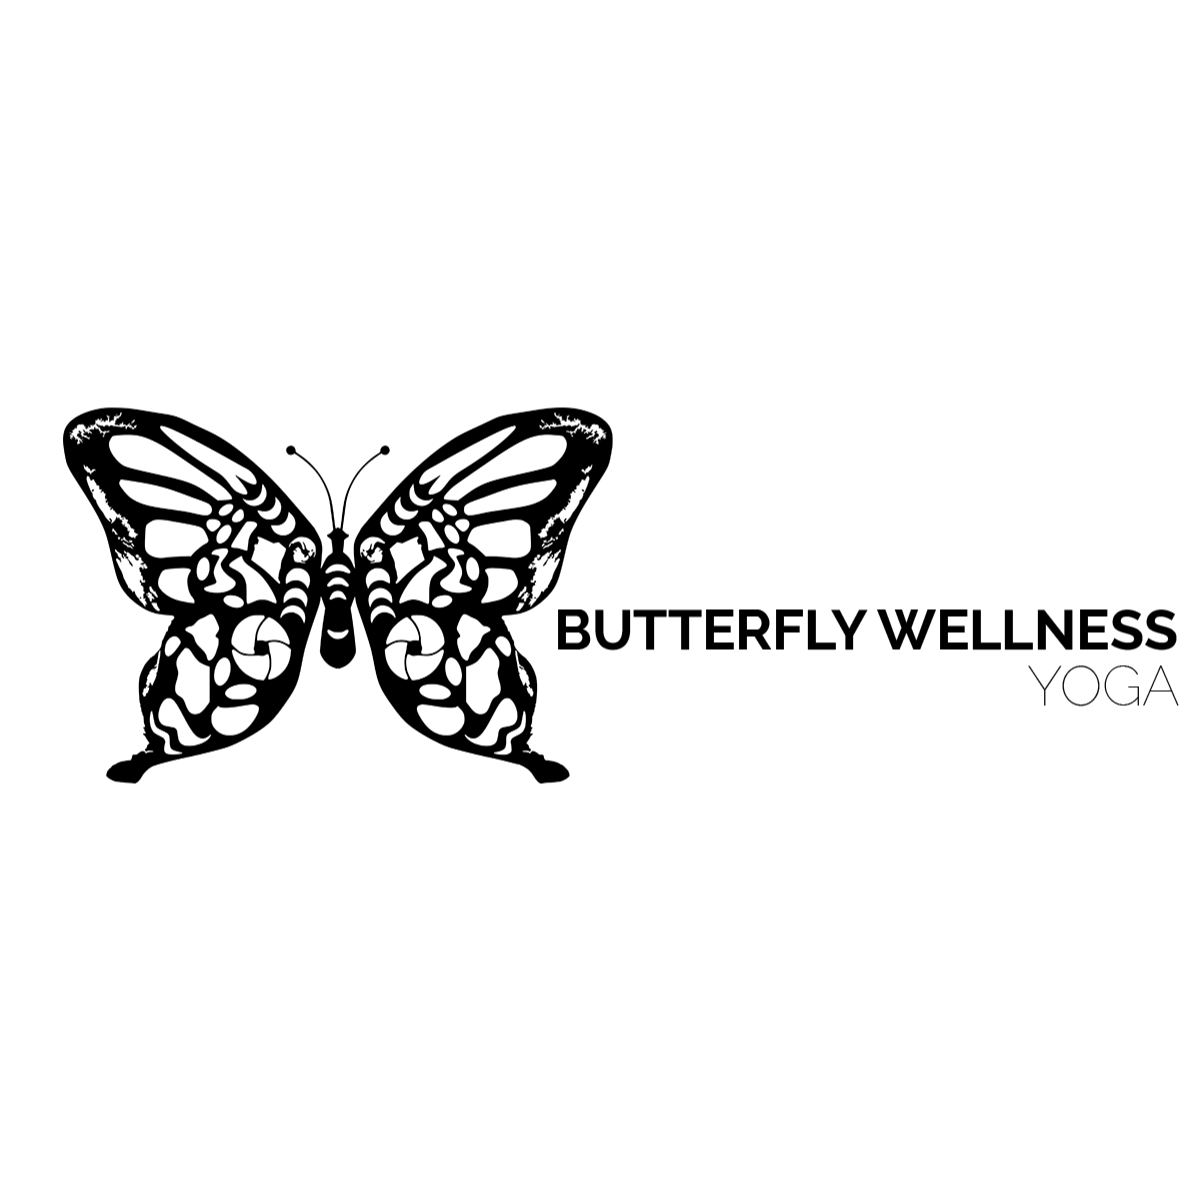 Butterfly Wellness yoga